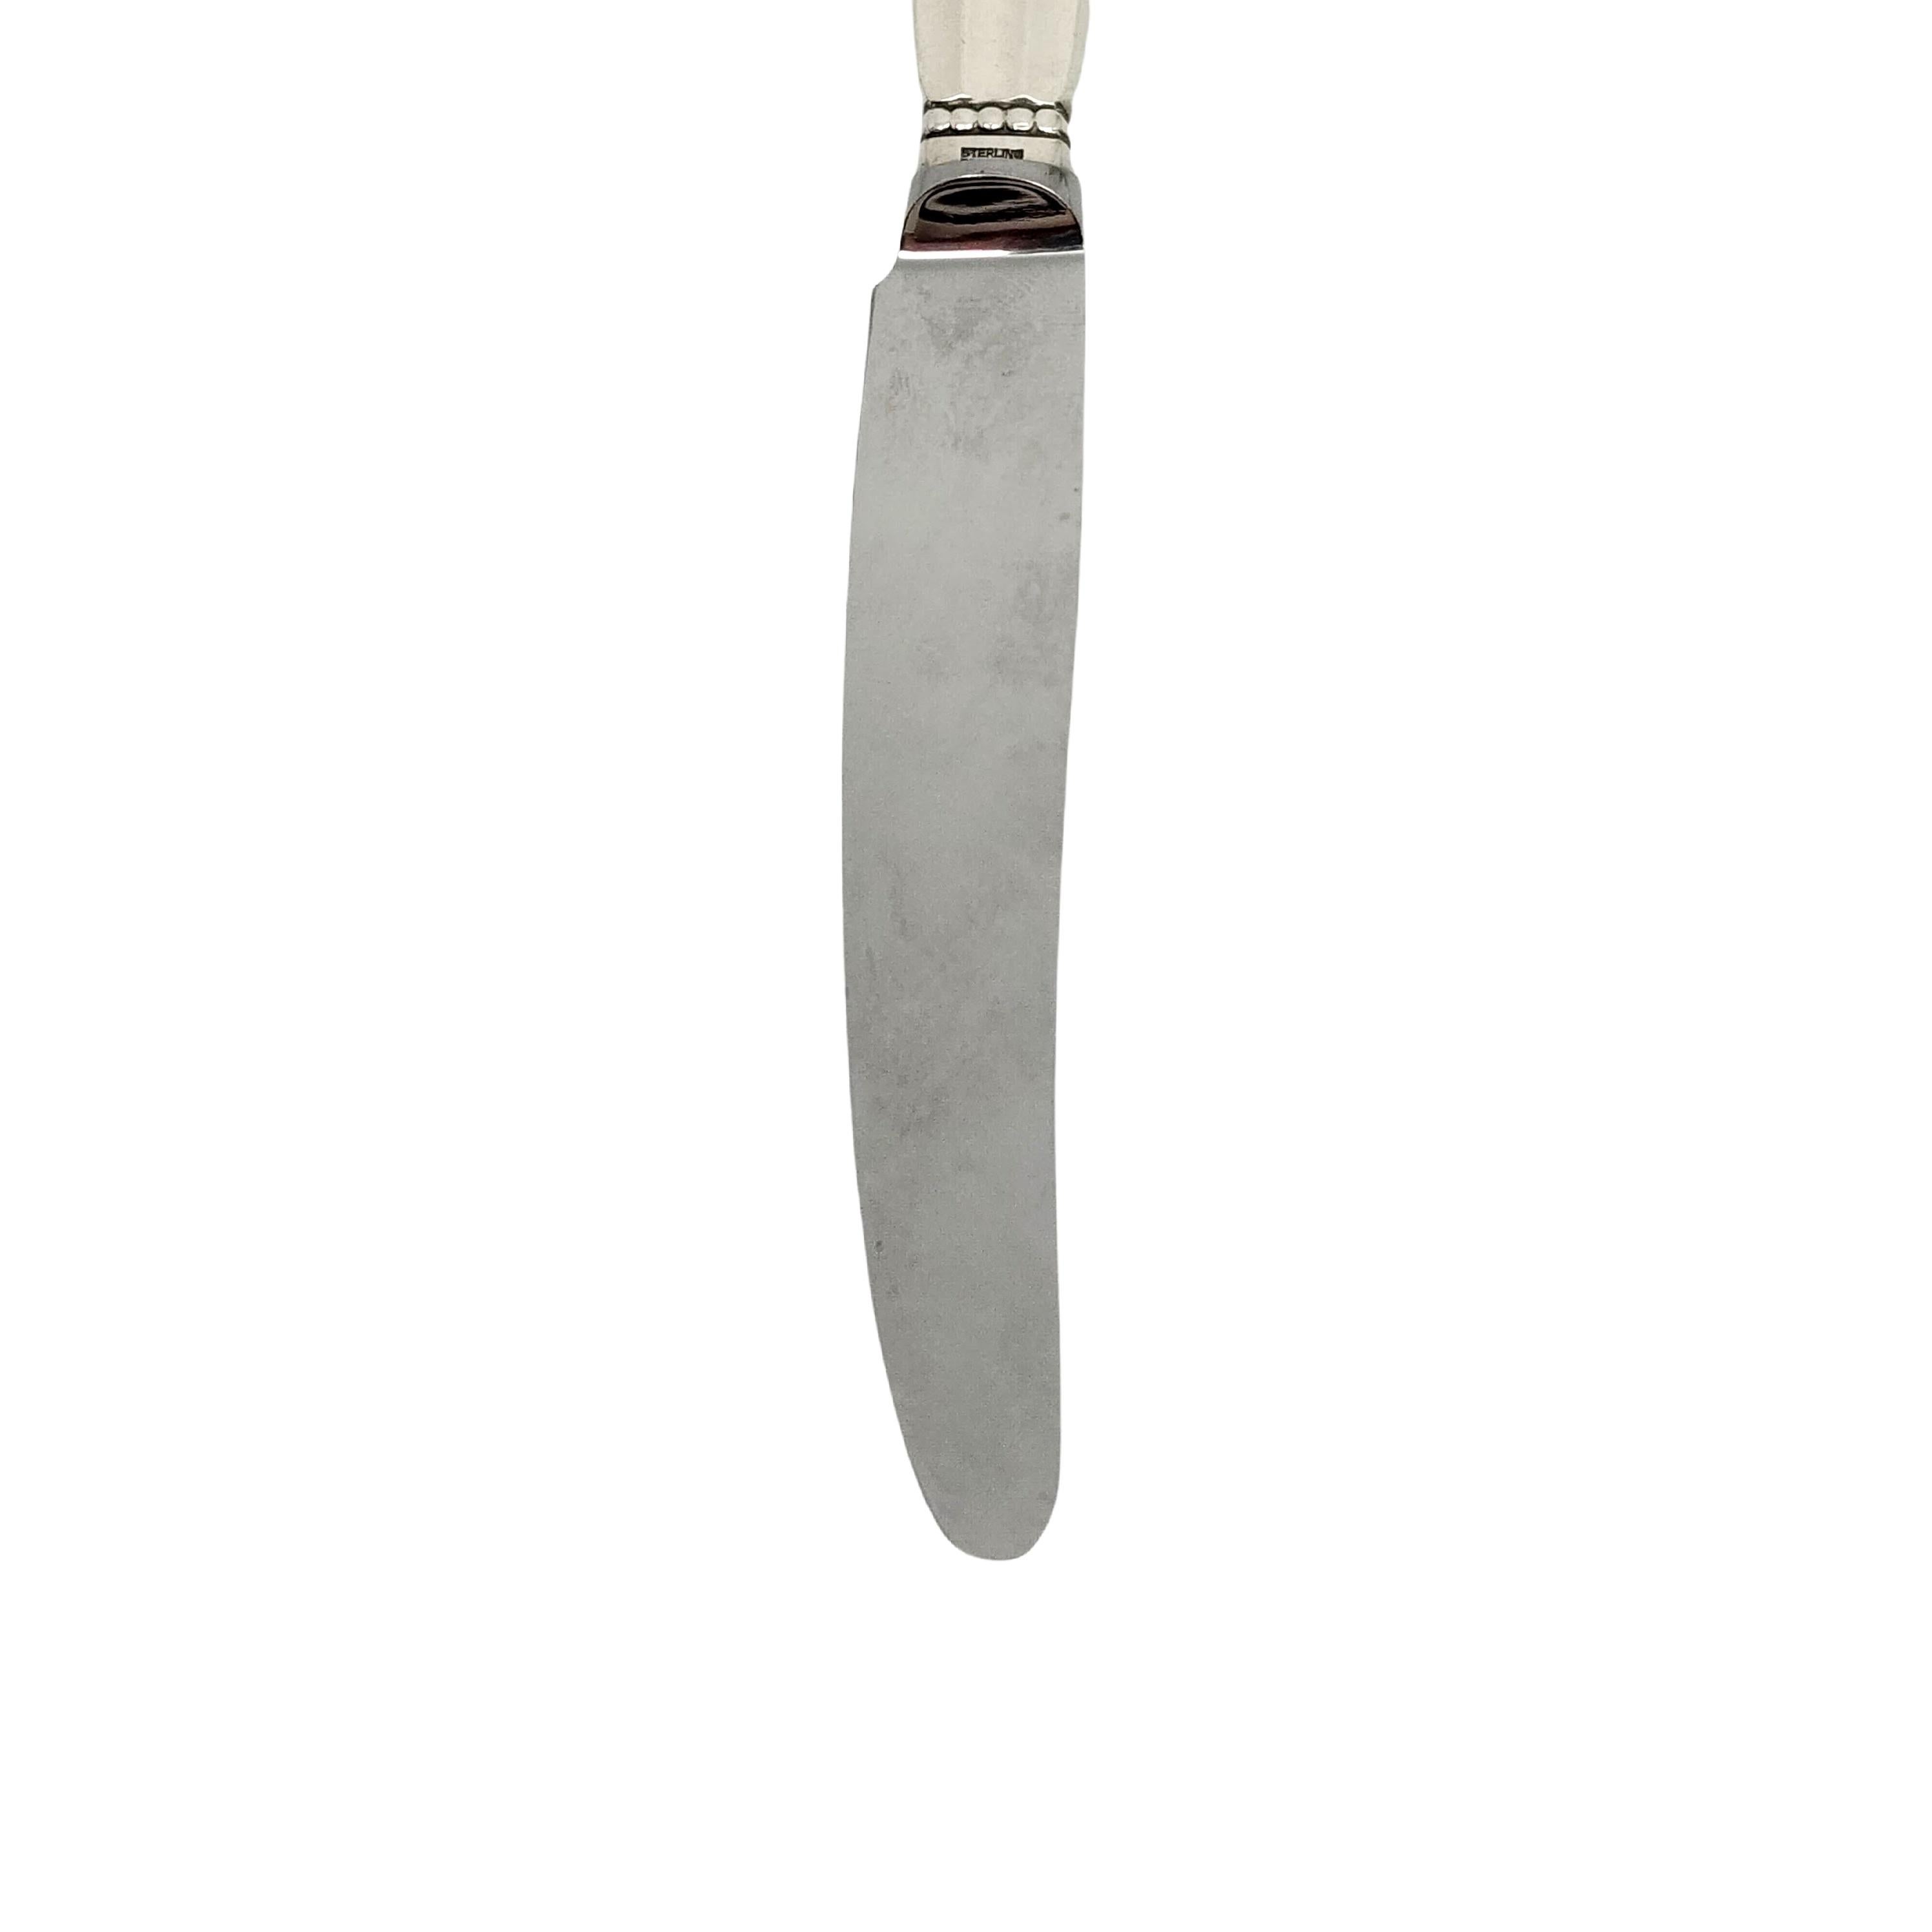 Georg Jensen Denmark Acorn Sterling Silver Handle Fruit Knife #12781 For Sale 2